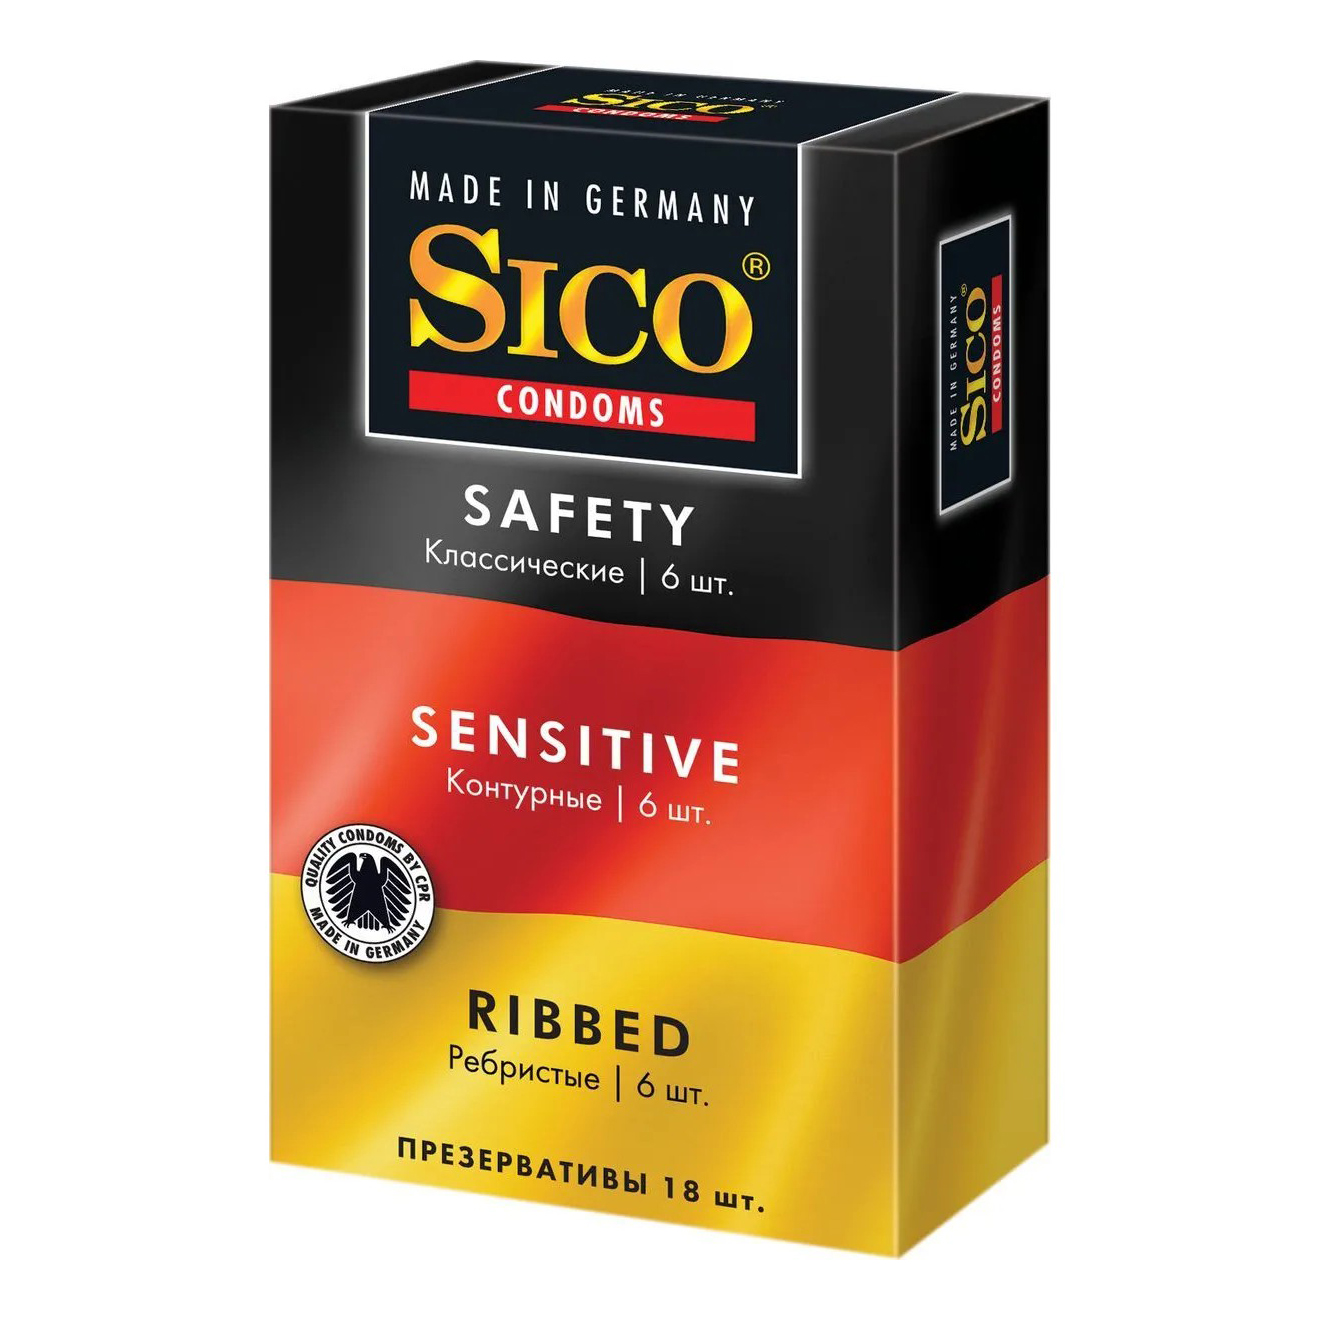 Презервативы Sico Safety-Sensitive-Ribbed 18 шт